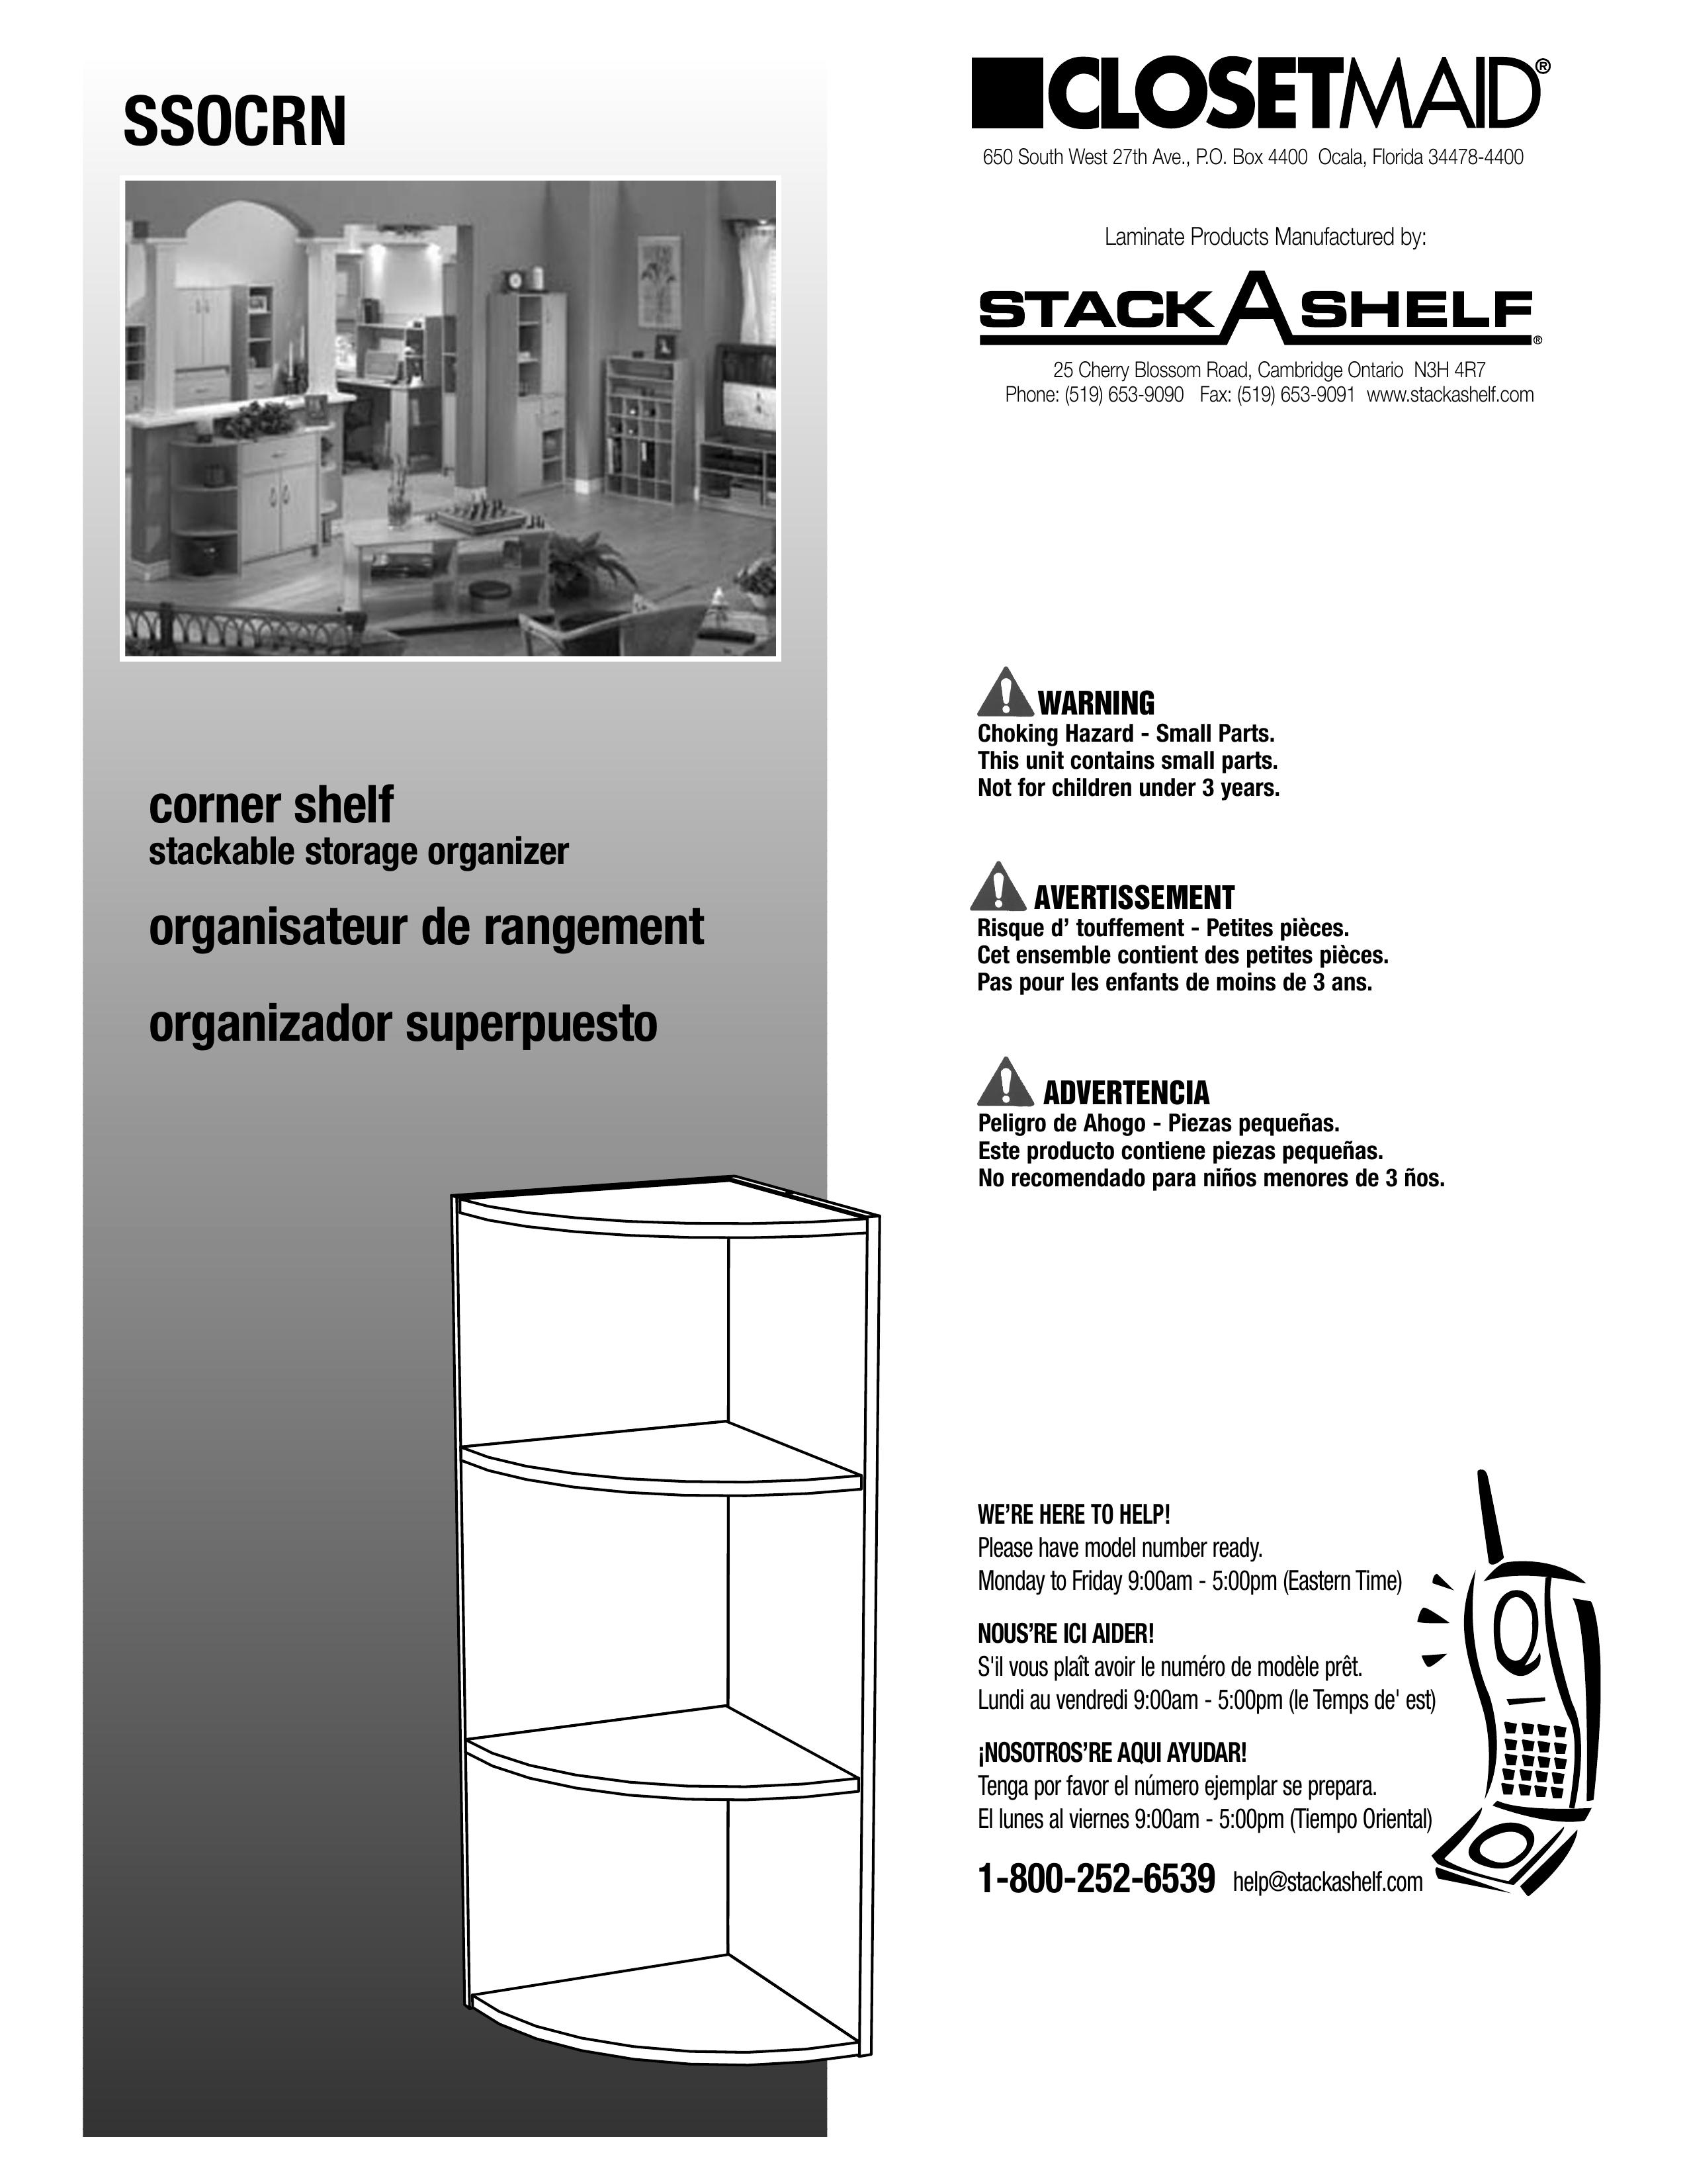 Closet Maid SSOCRN Outdoor Storage User Manual